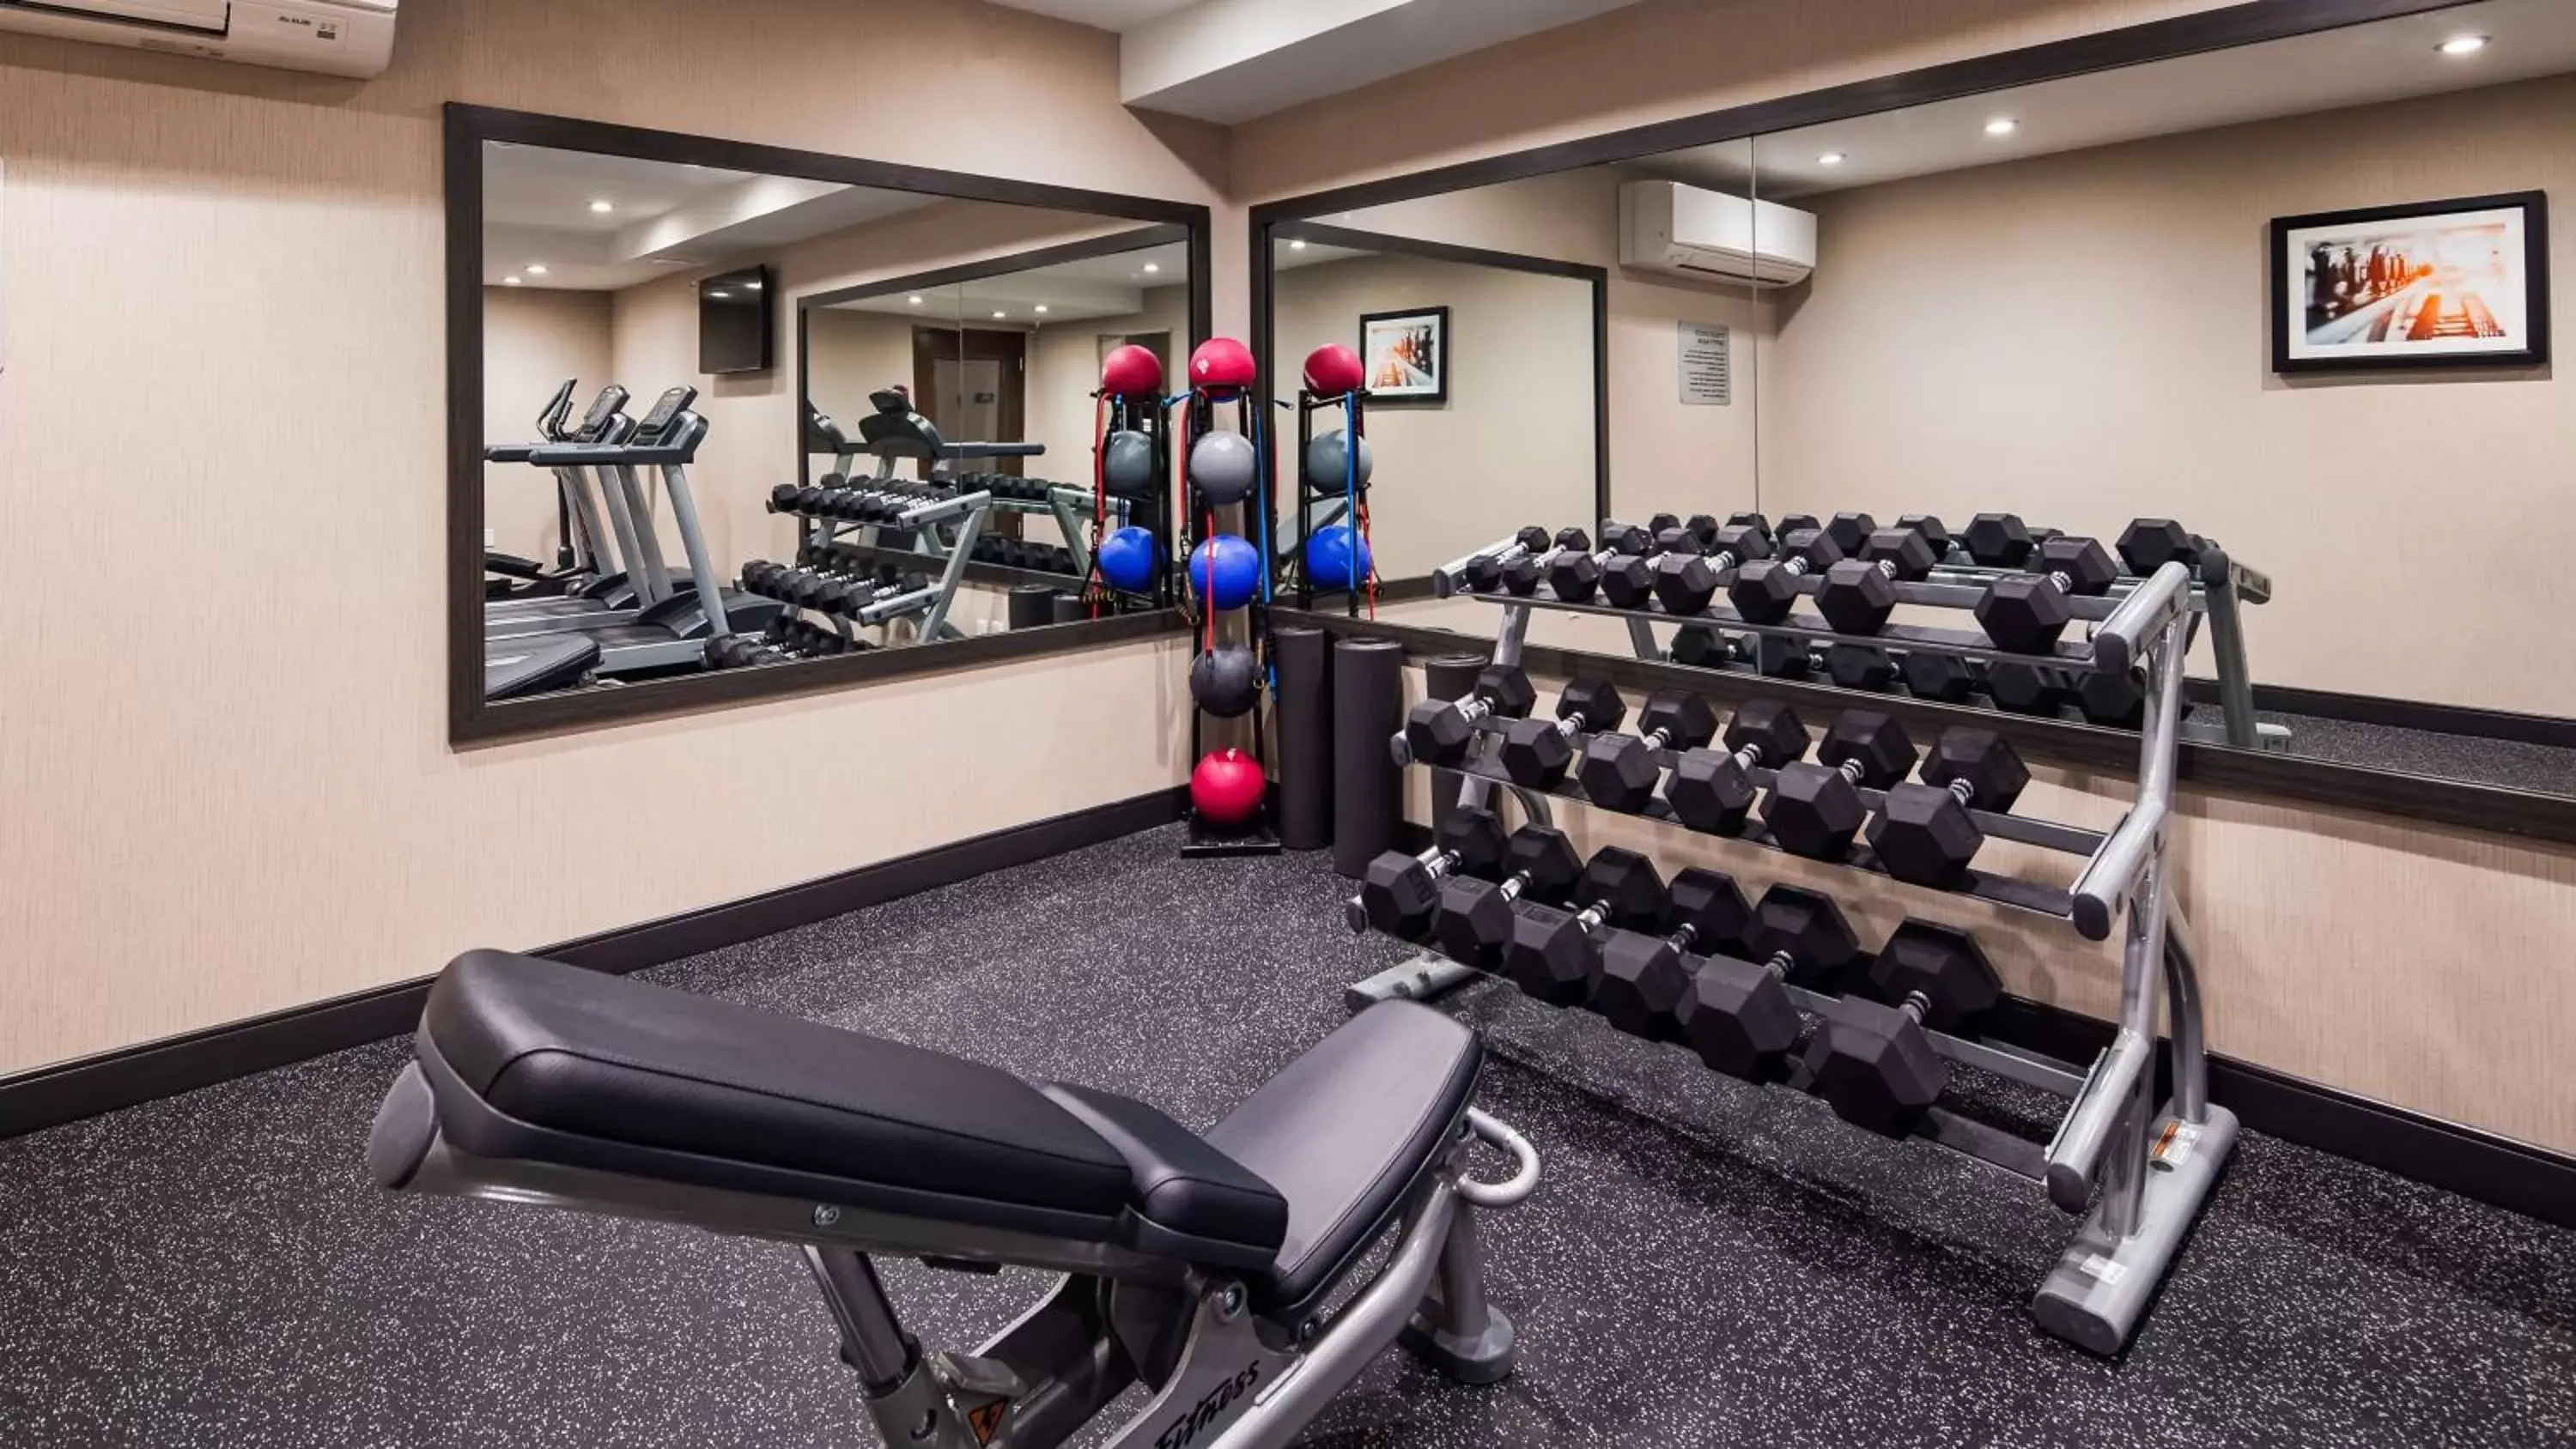 Fitness centre/facilities, Fitness Center/Facilities in Best Western Braintree Inn